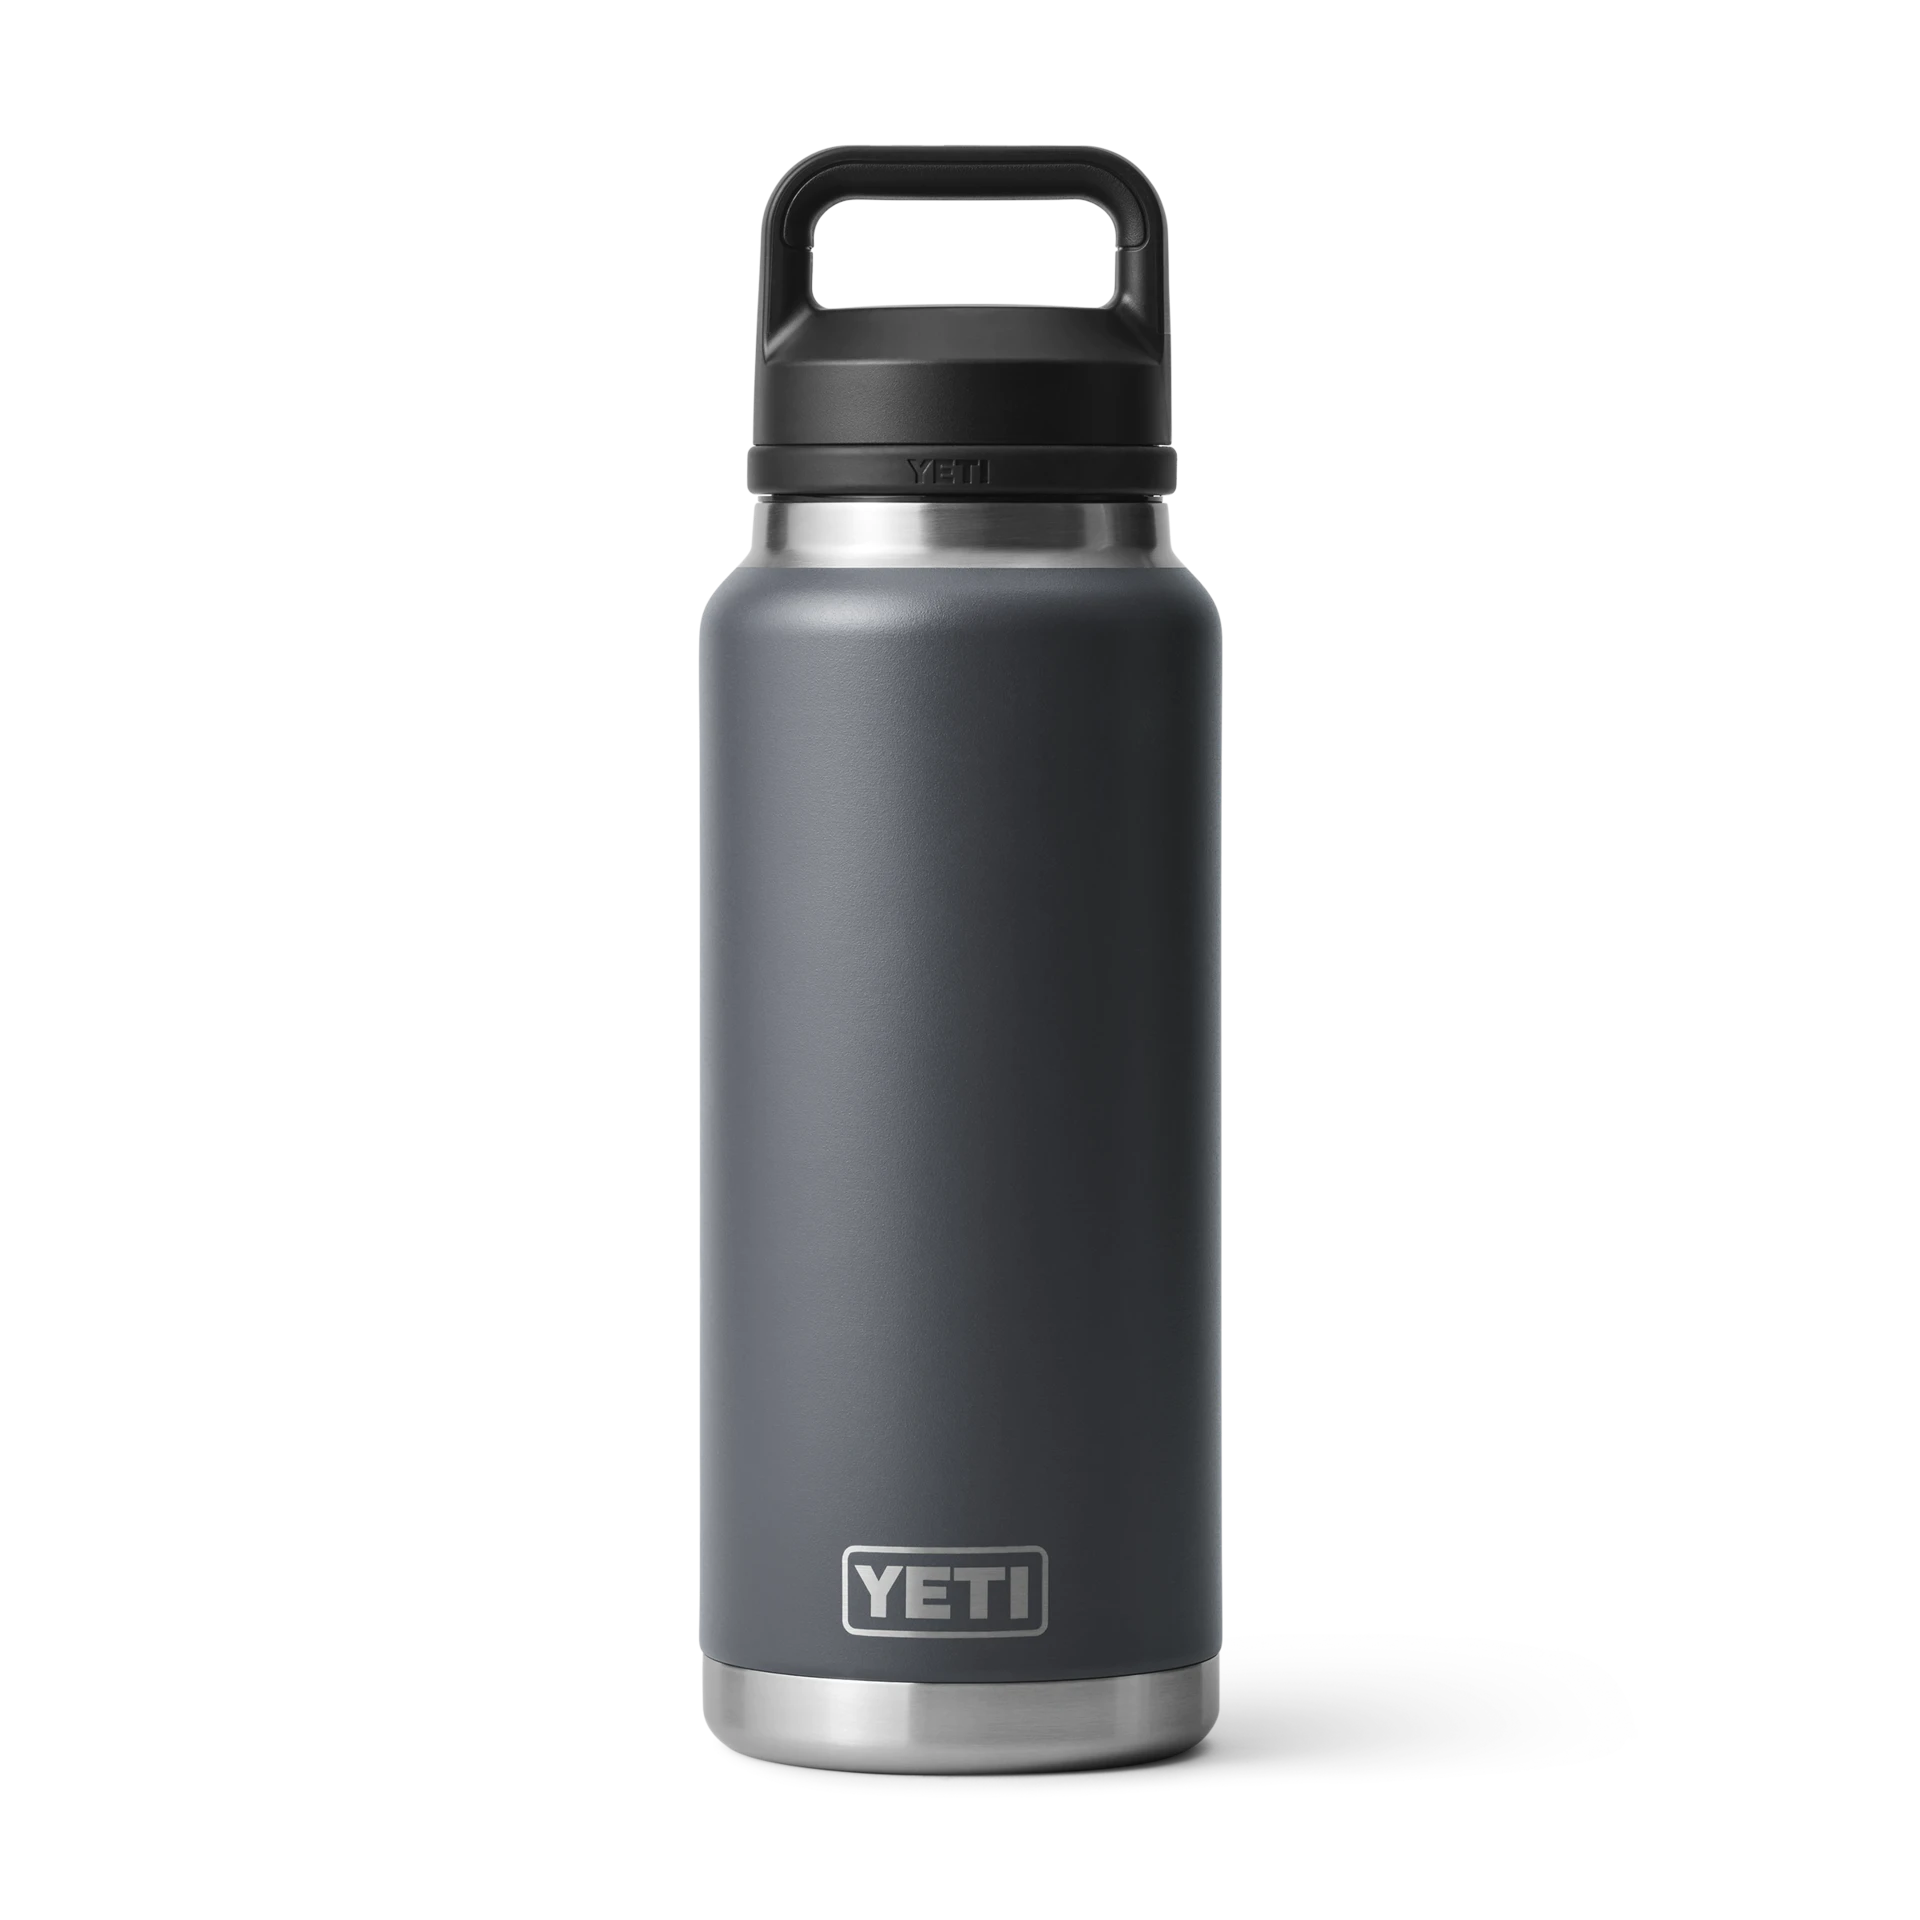 New YETI Rambler Bottles - White's Tackle